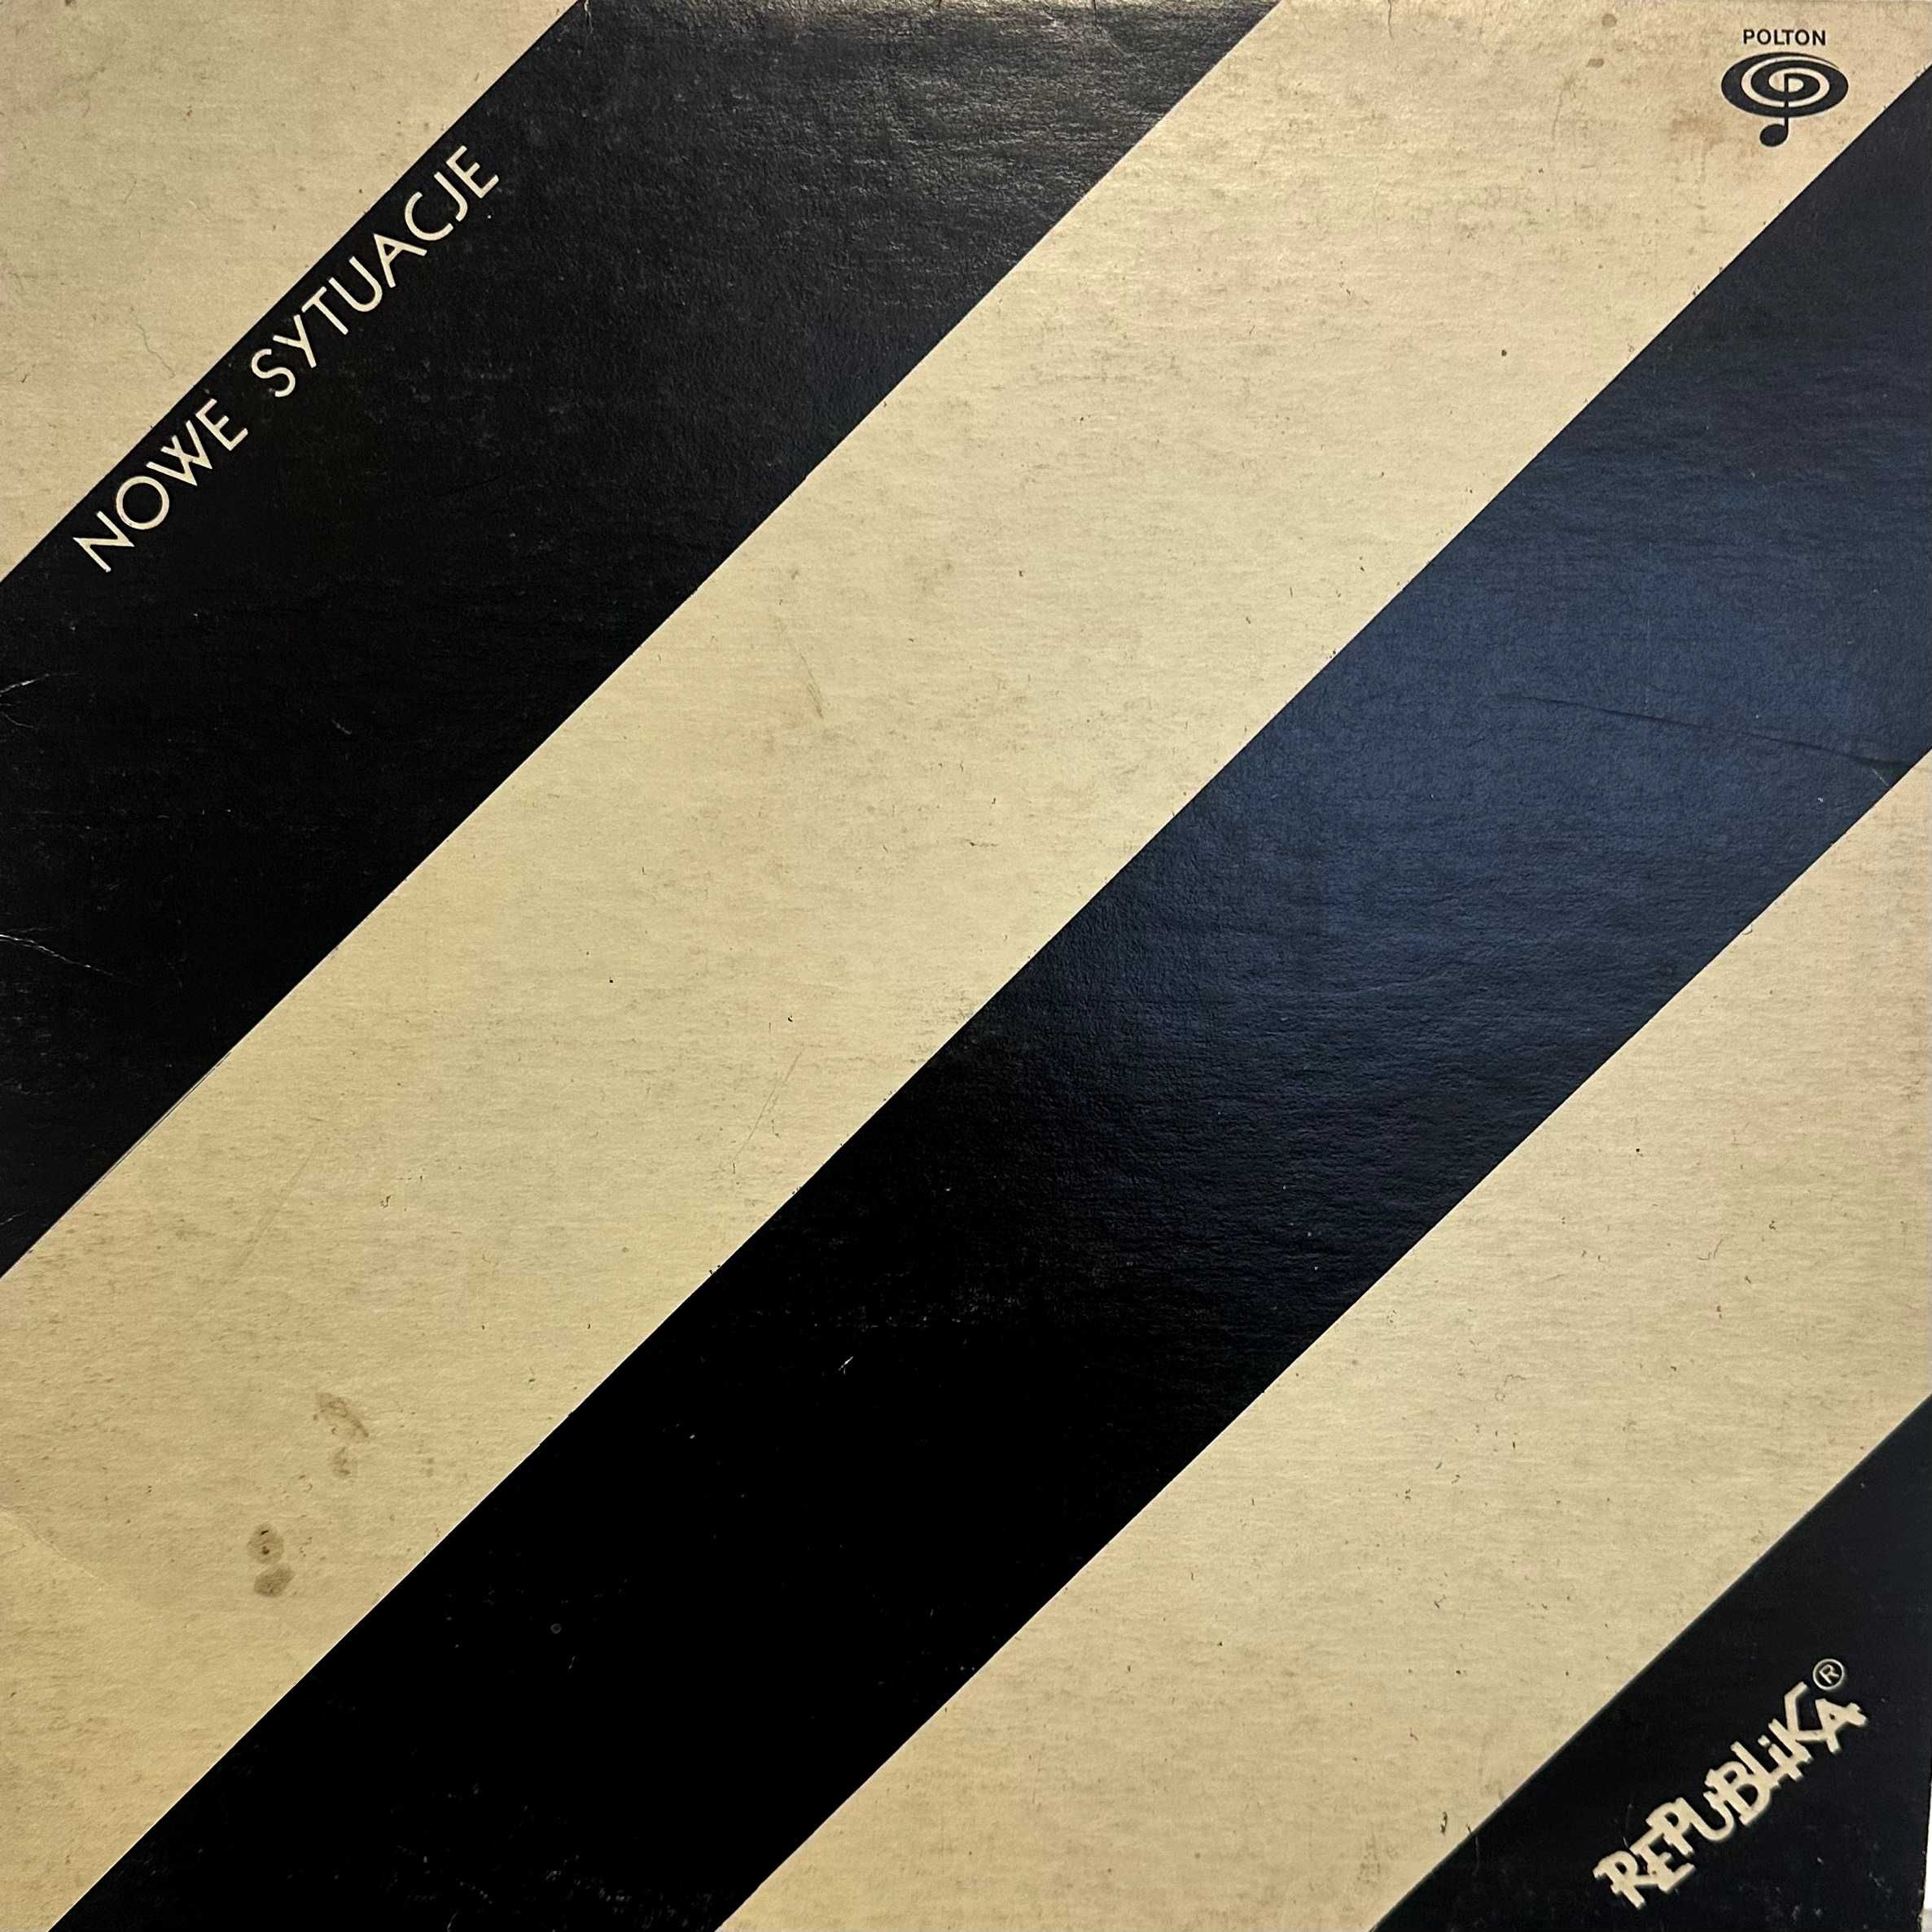 Republika - Nowe Sytuacje (Vinyl, 1983, Poland)